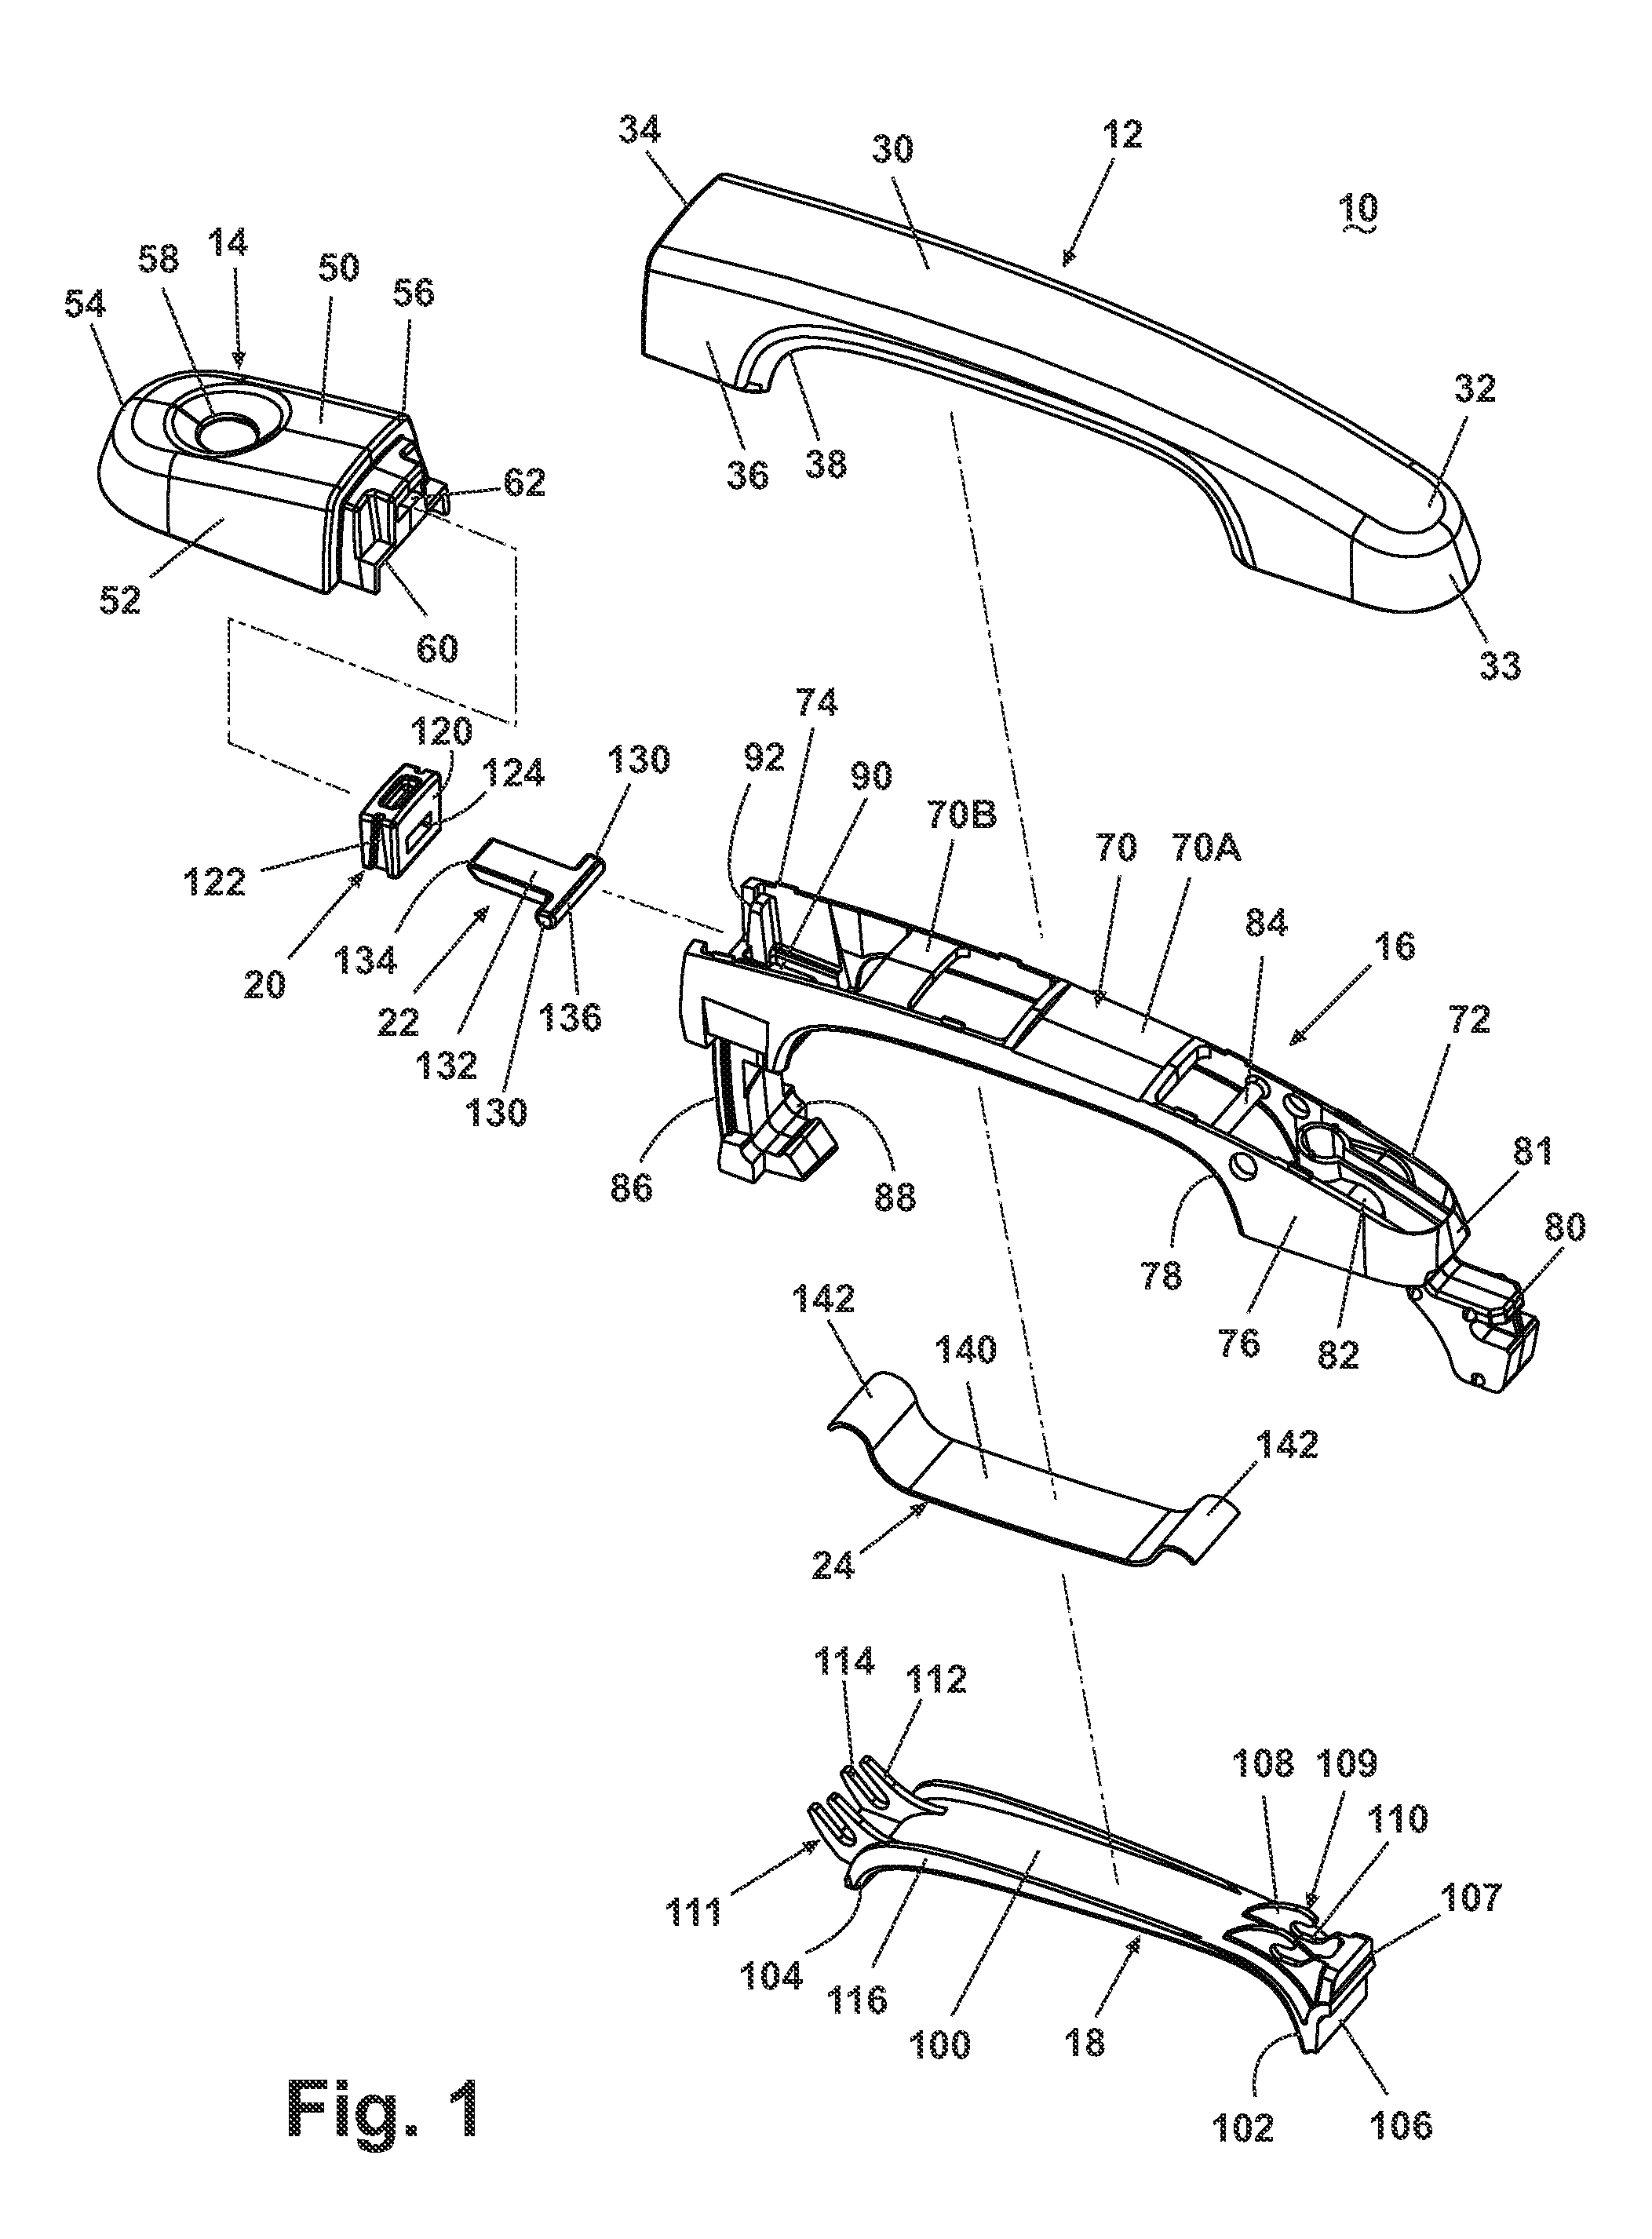 Vehicular door handle included secondary latch